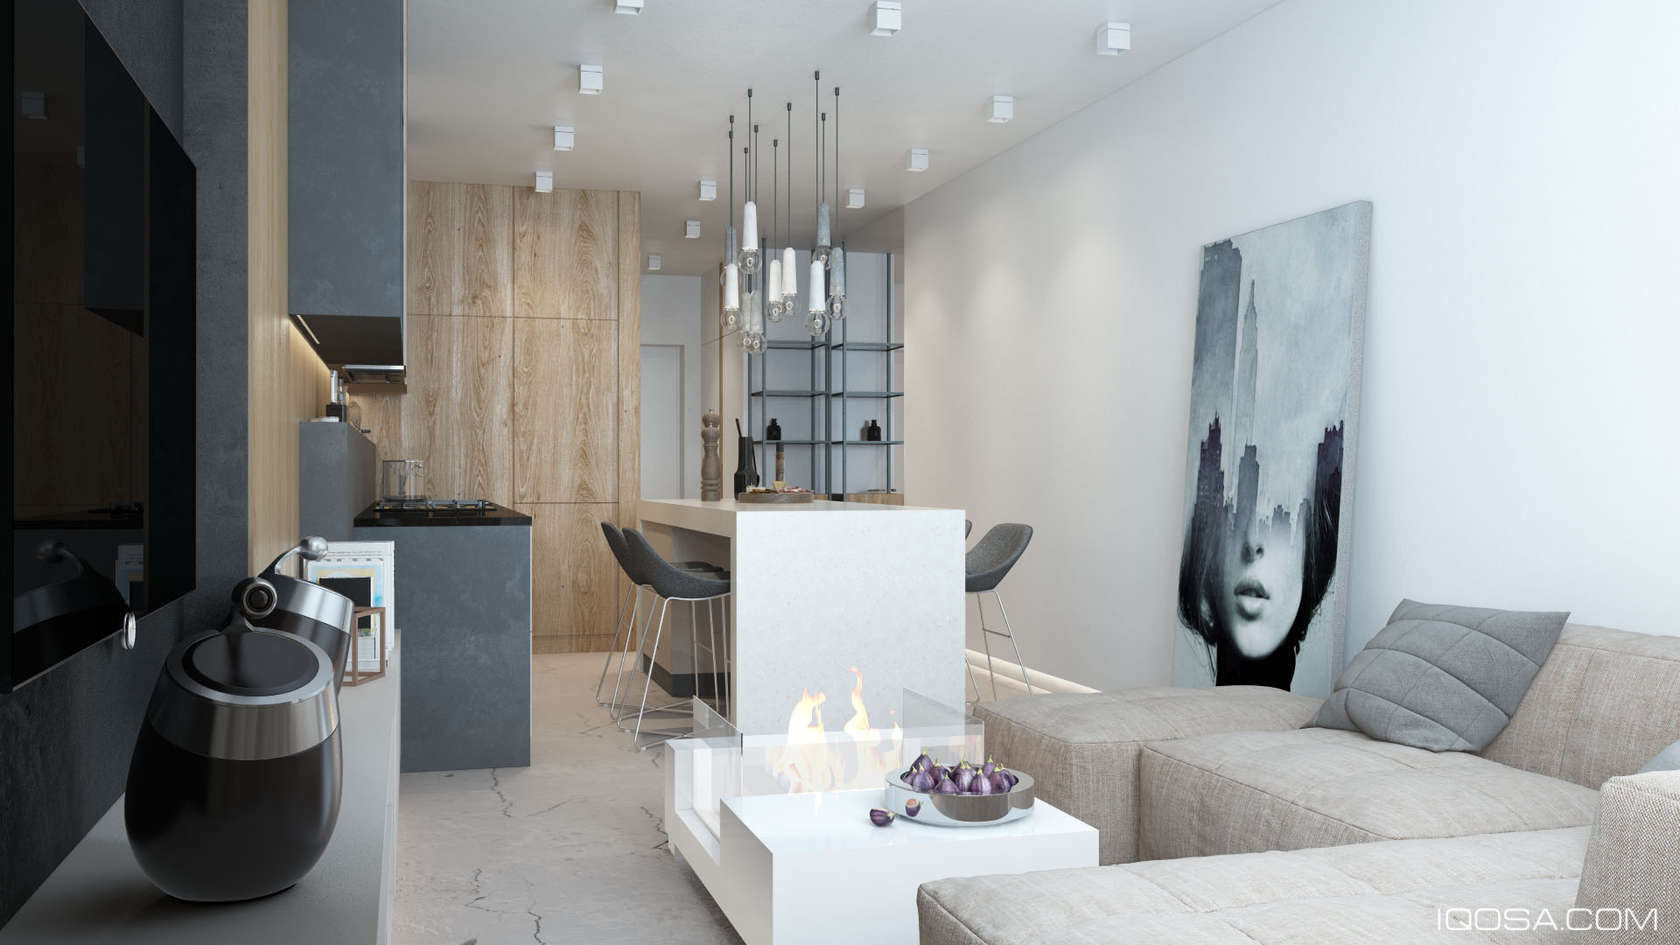 Luxury Small Studio Apartment Design Combined Modern And Minimalist Style Decor Looks Stunning Roohome,Graphic Design Jobs Jacksonville Fl